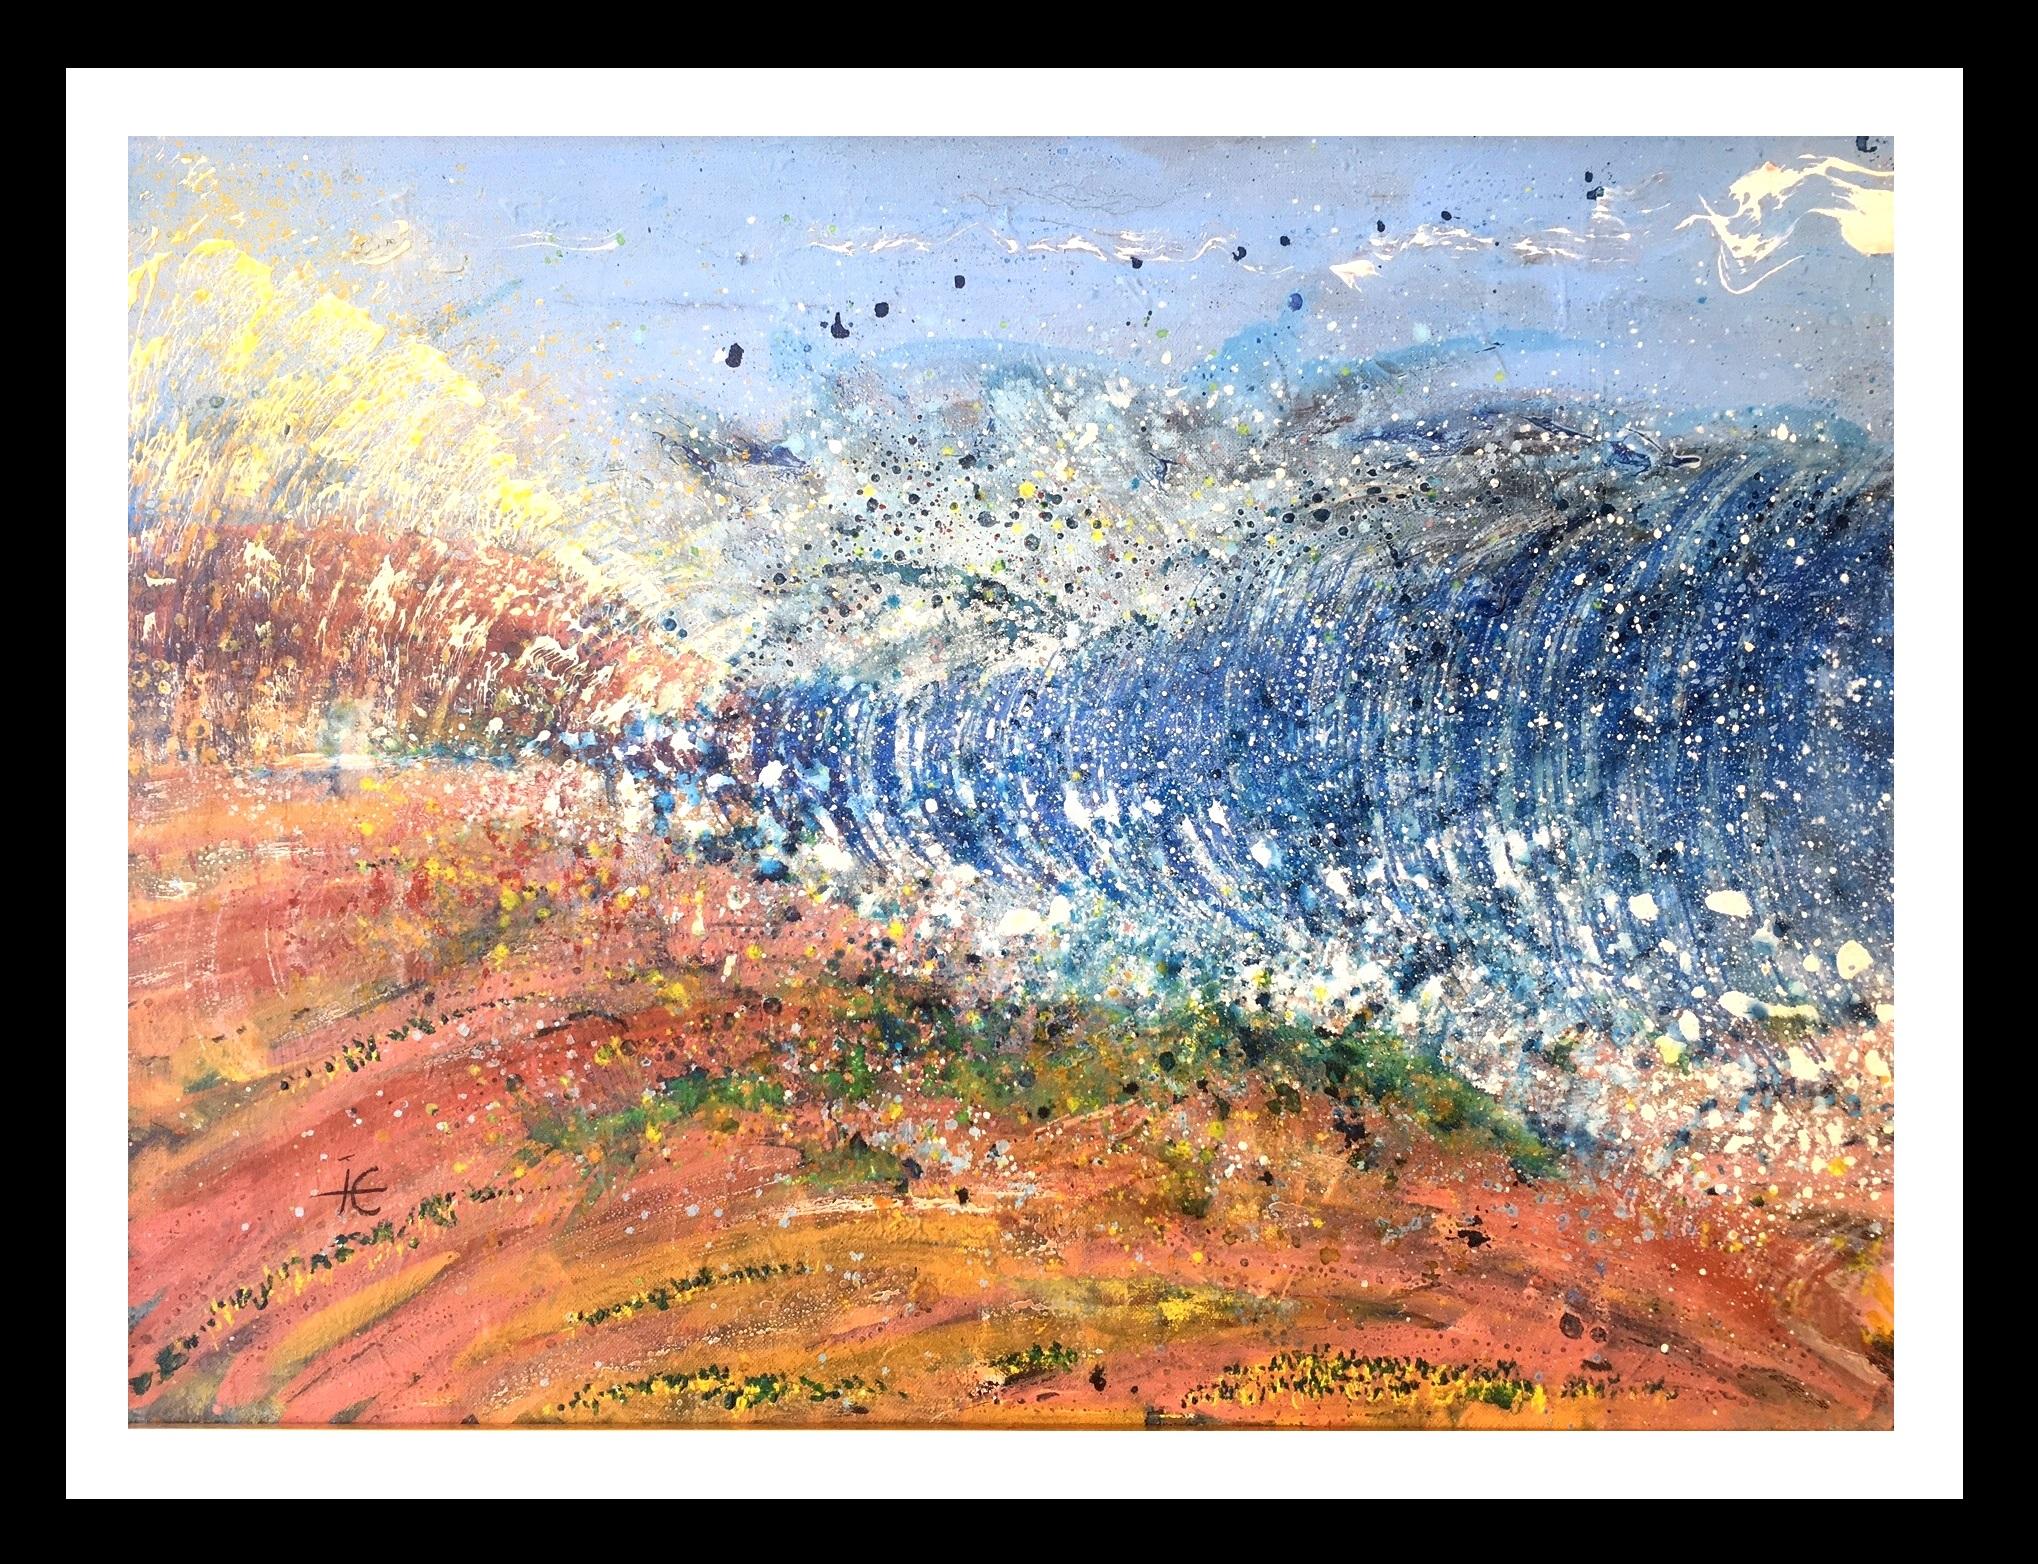 Abstract Painting Isidro Cahue - I. Cahue  Mer et plage  abstrait. original. peinture acrylique sur toile